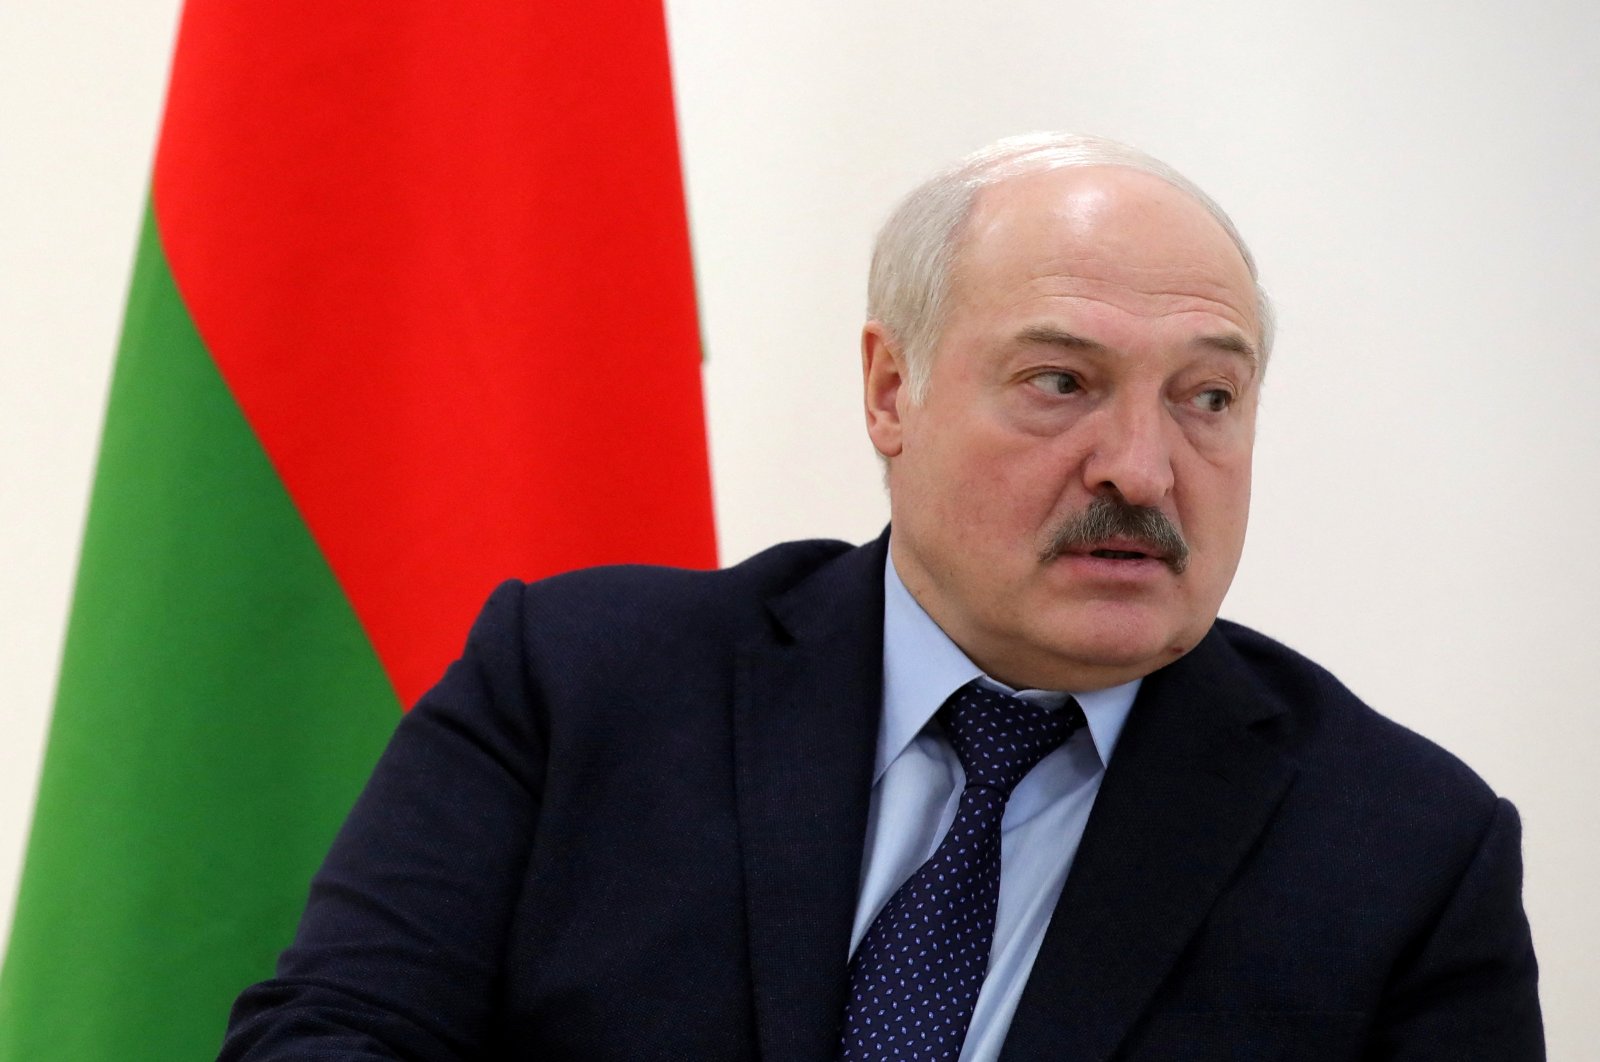 Ukraina mencoba menyerang fasilitas militer di Belarus: Lukashenko